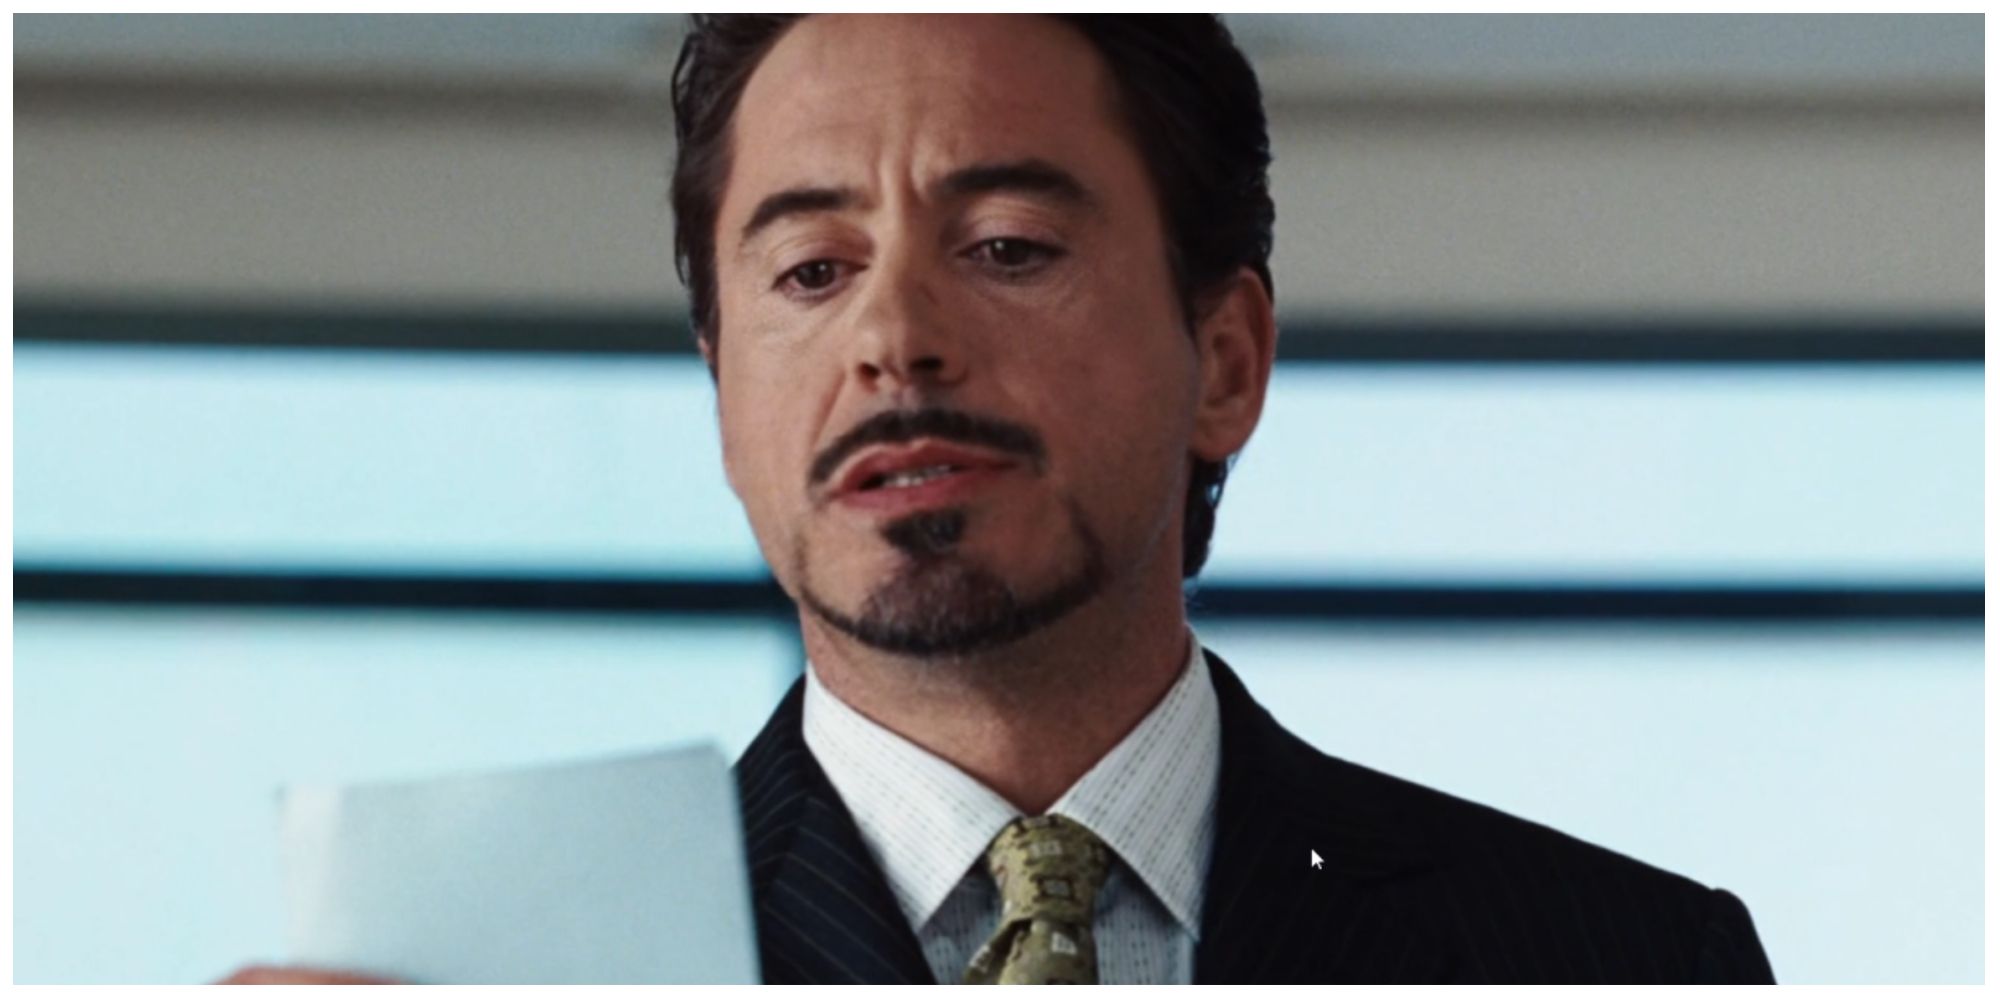 Robert Downey Jr. as Tony Stark, Iron Man.